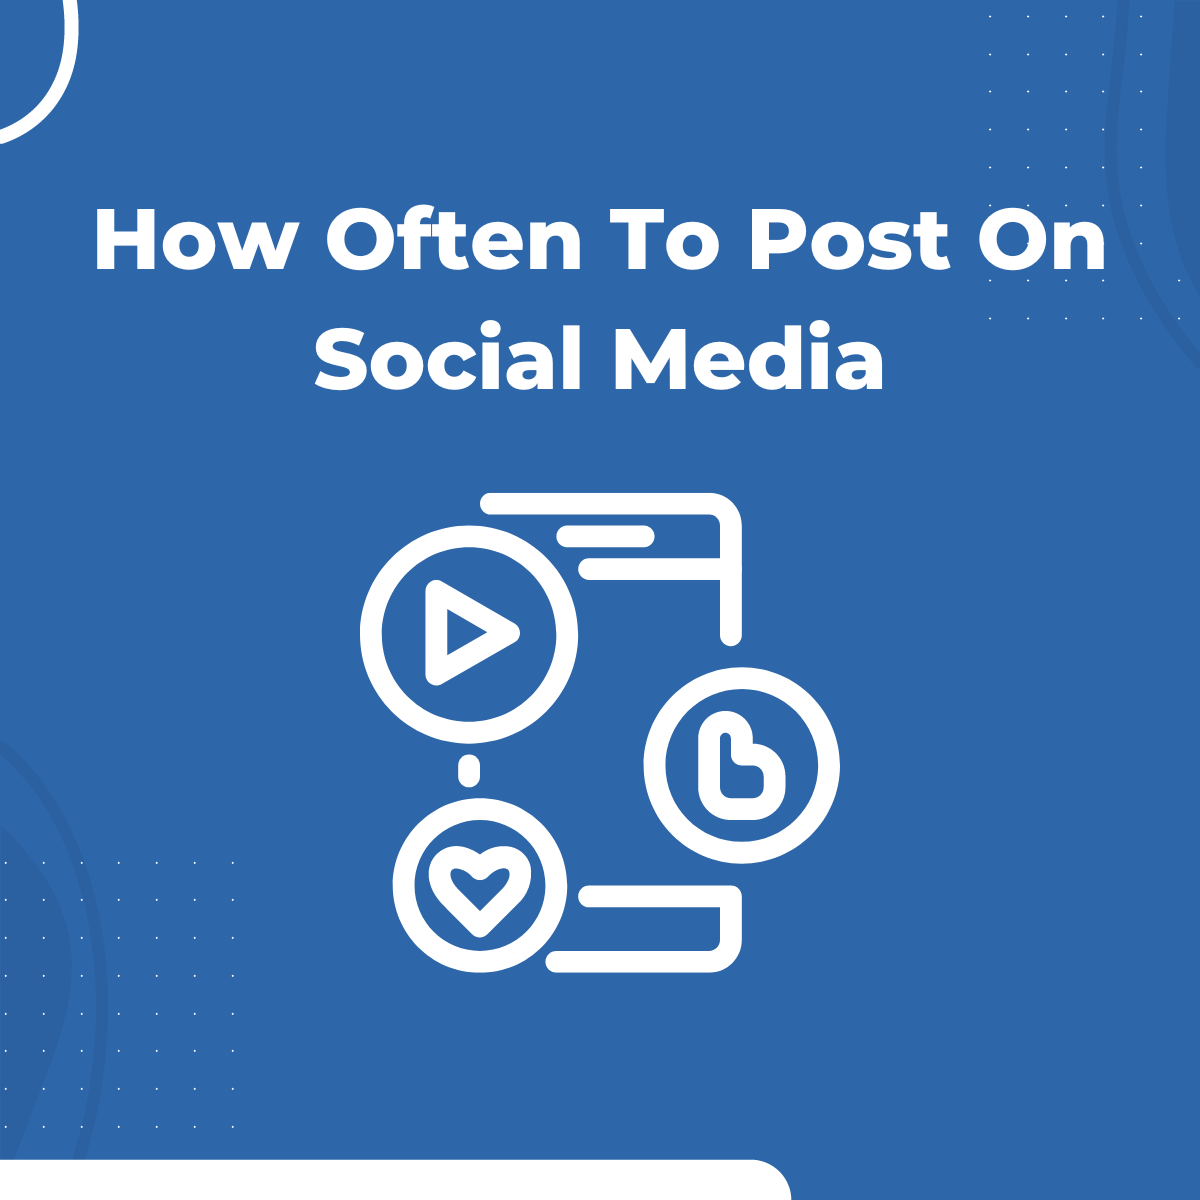 How Often To Post On Social Media Per Platform